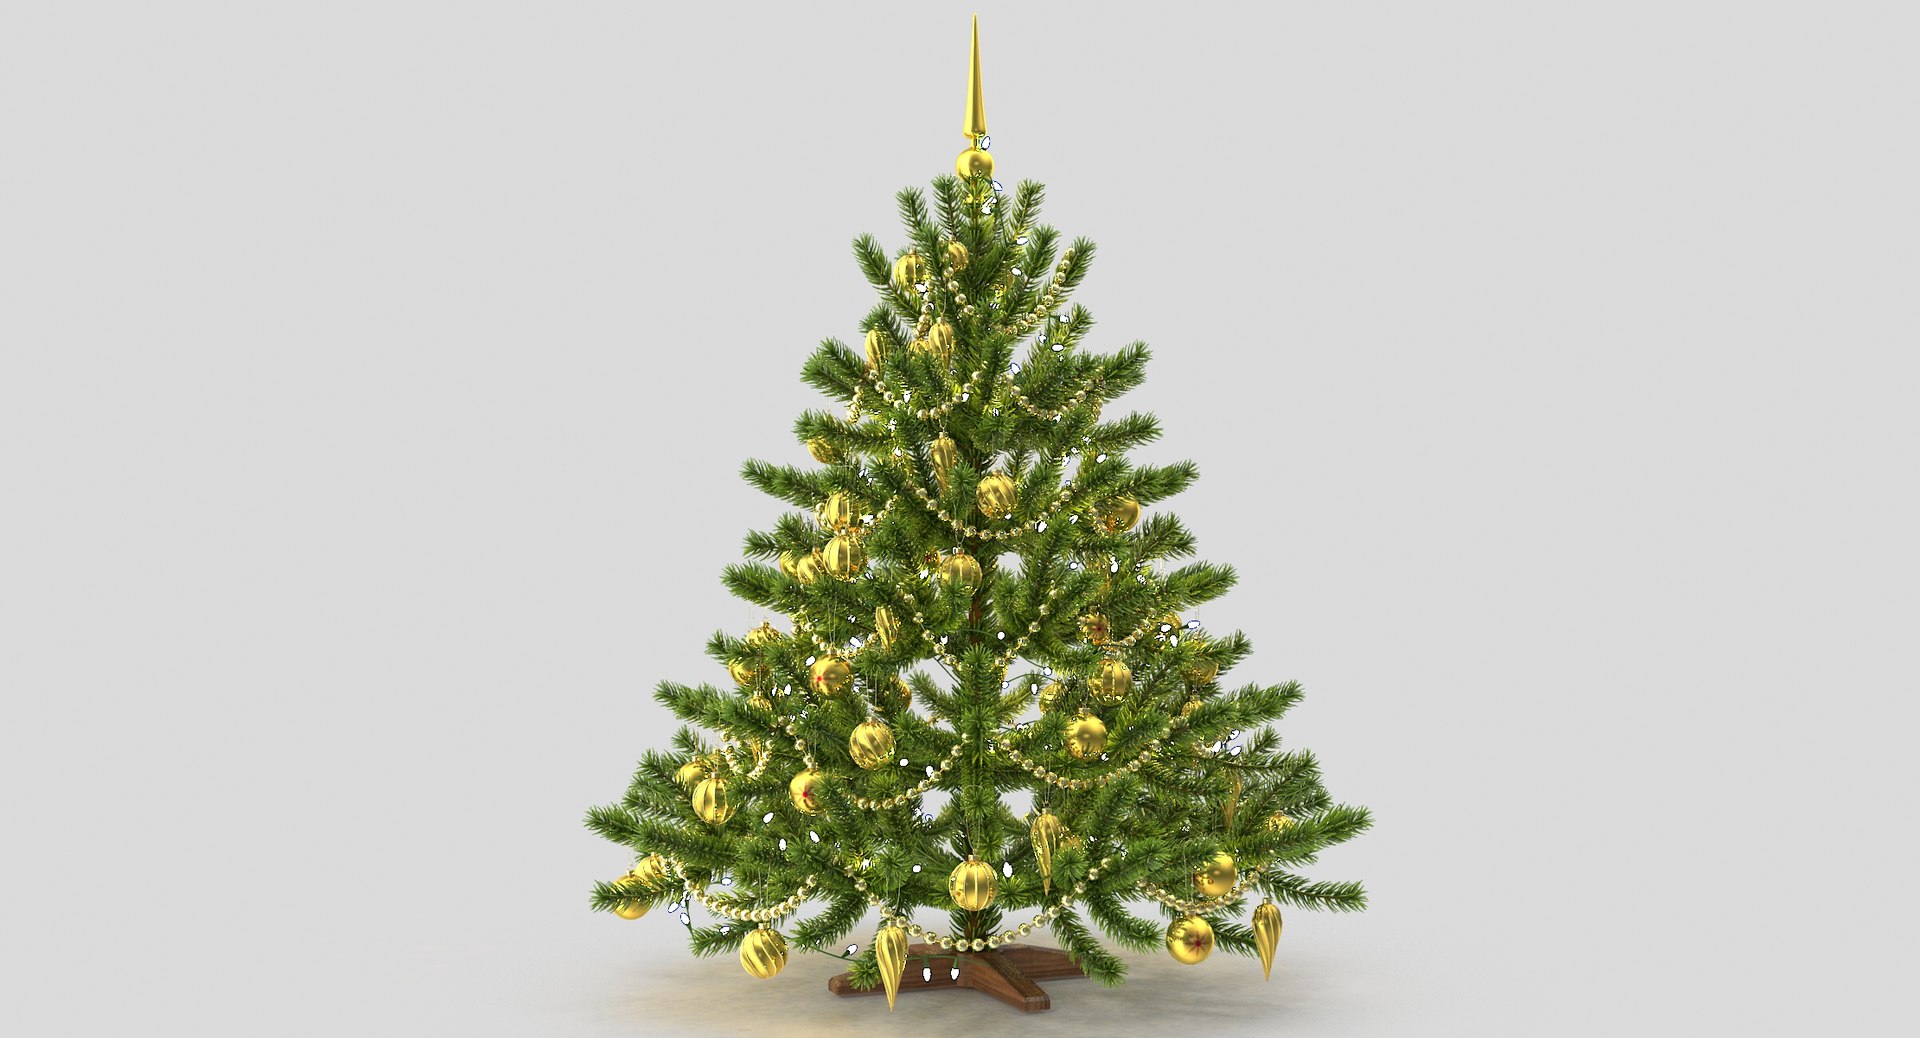 3pcs splicing model of Christmas tree #christmas #christmastree #3D #a